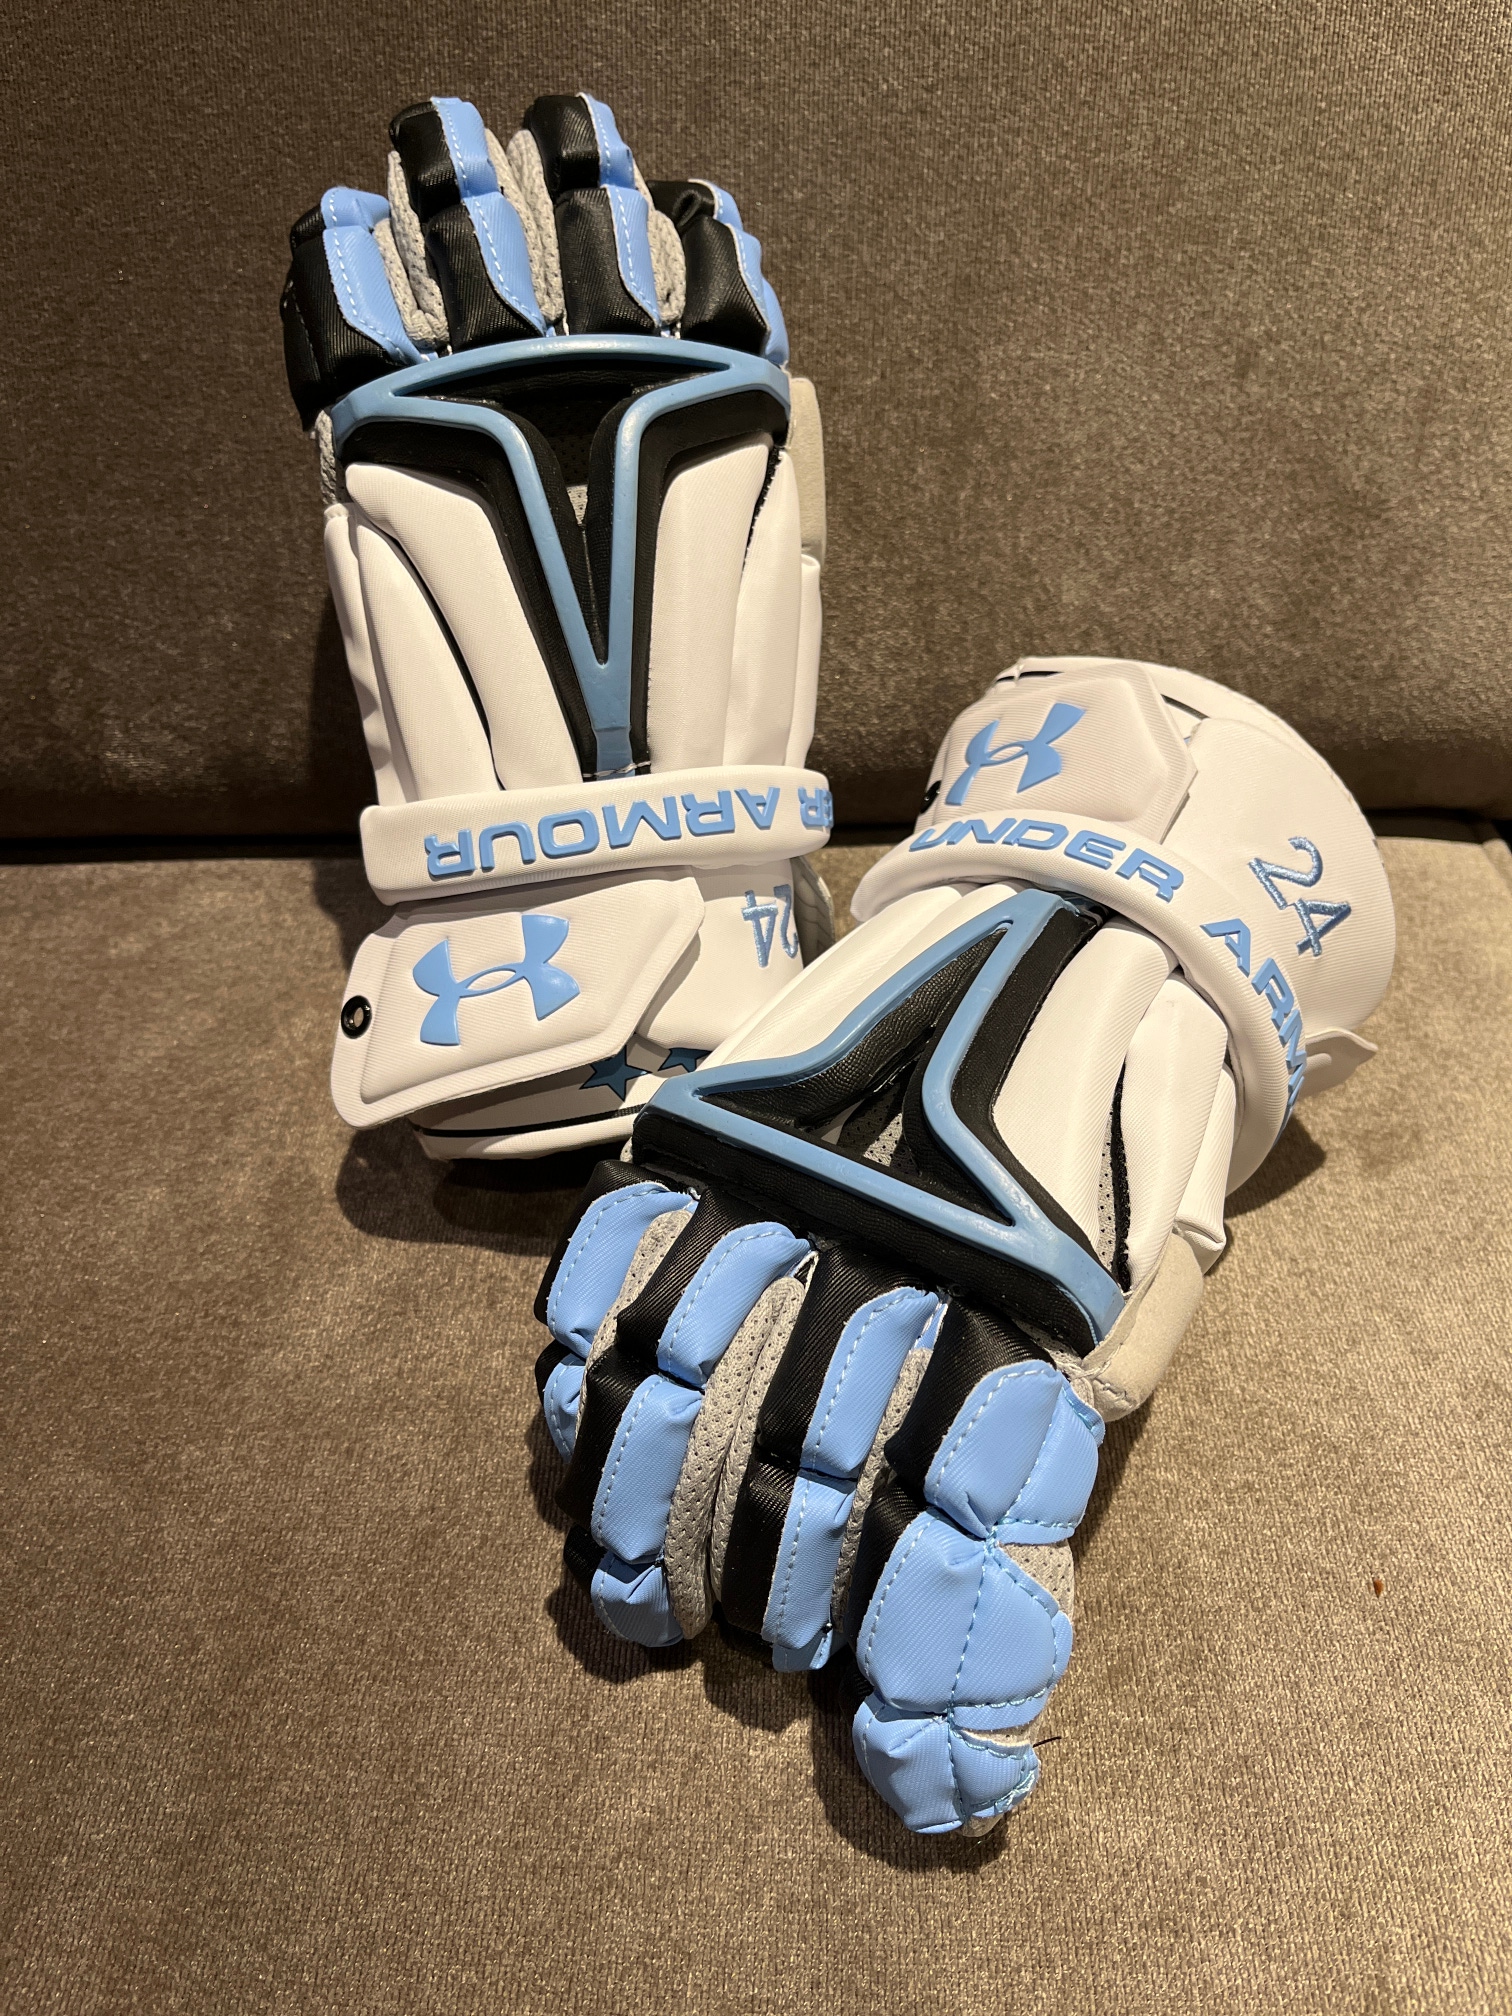 New Johns Hopkins Under Armour BioFit 2 Lacrosse Gloves 13"